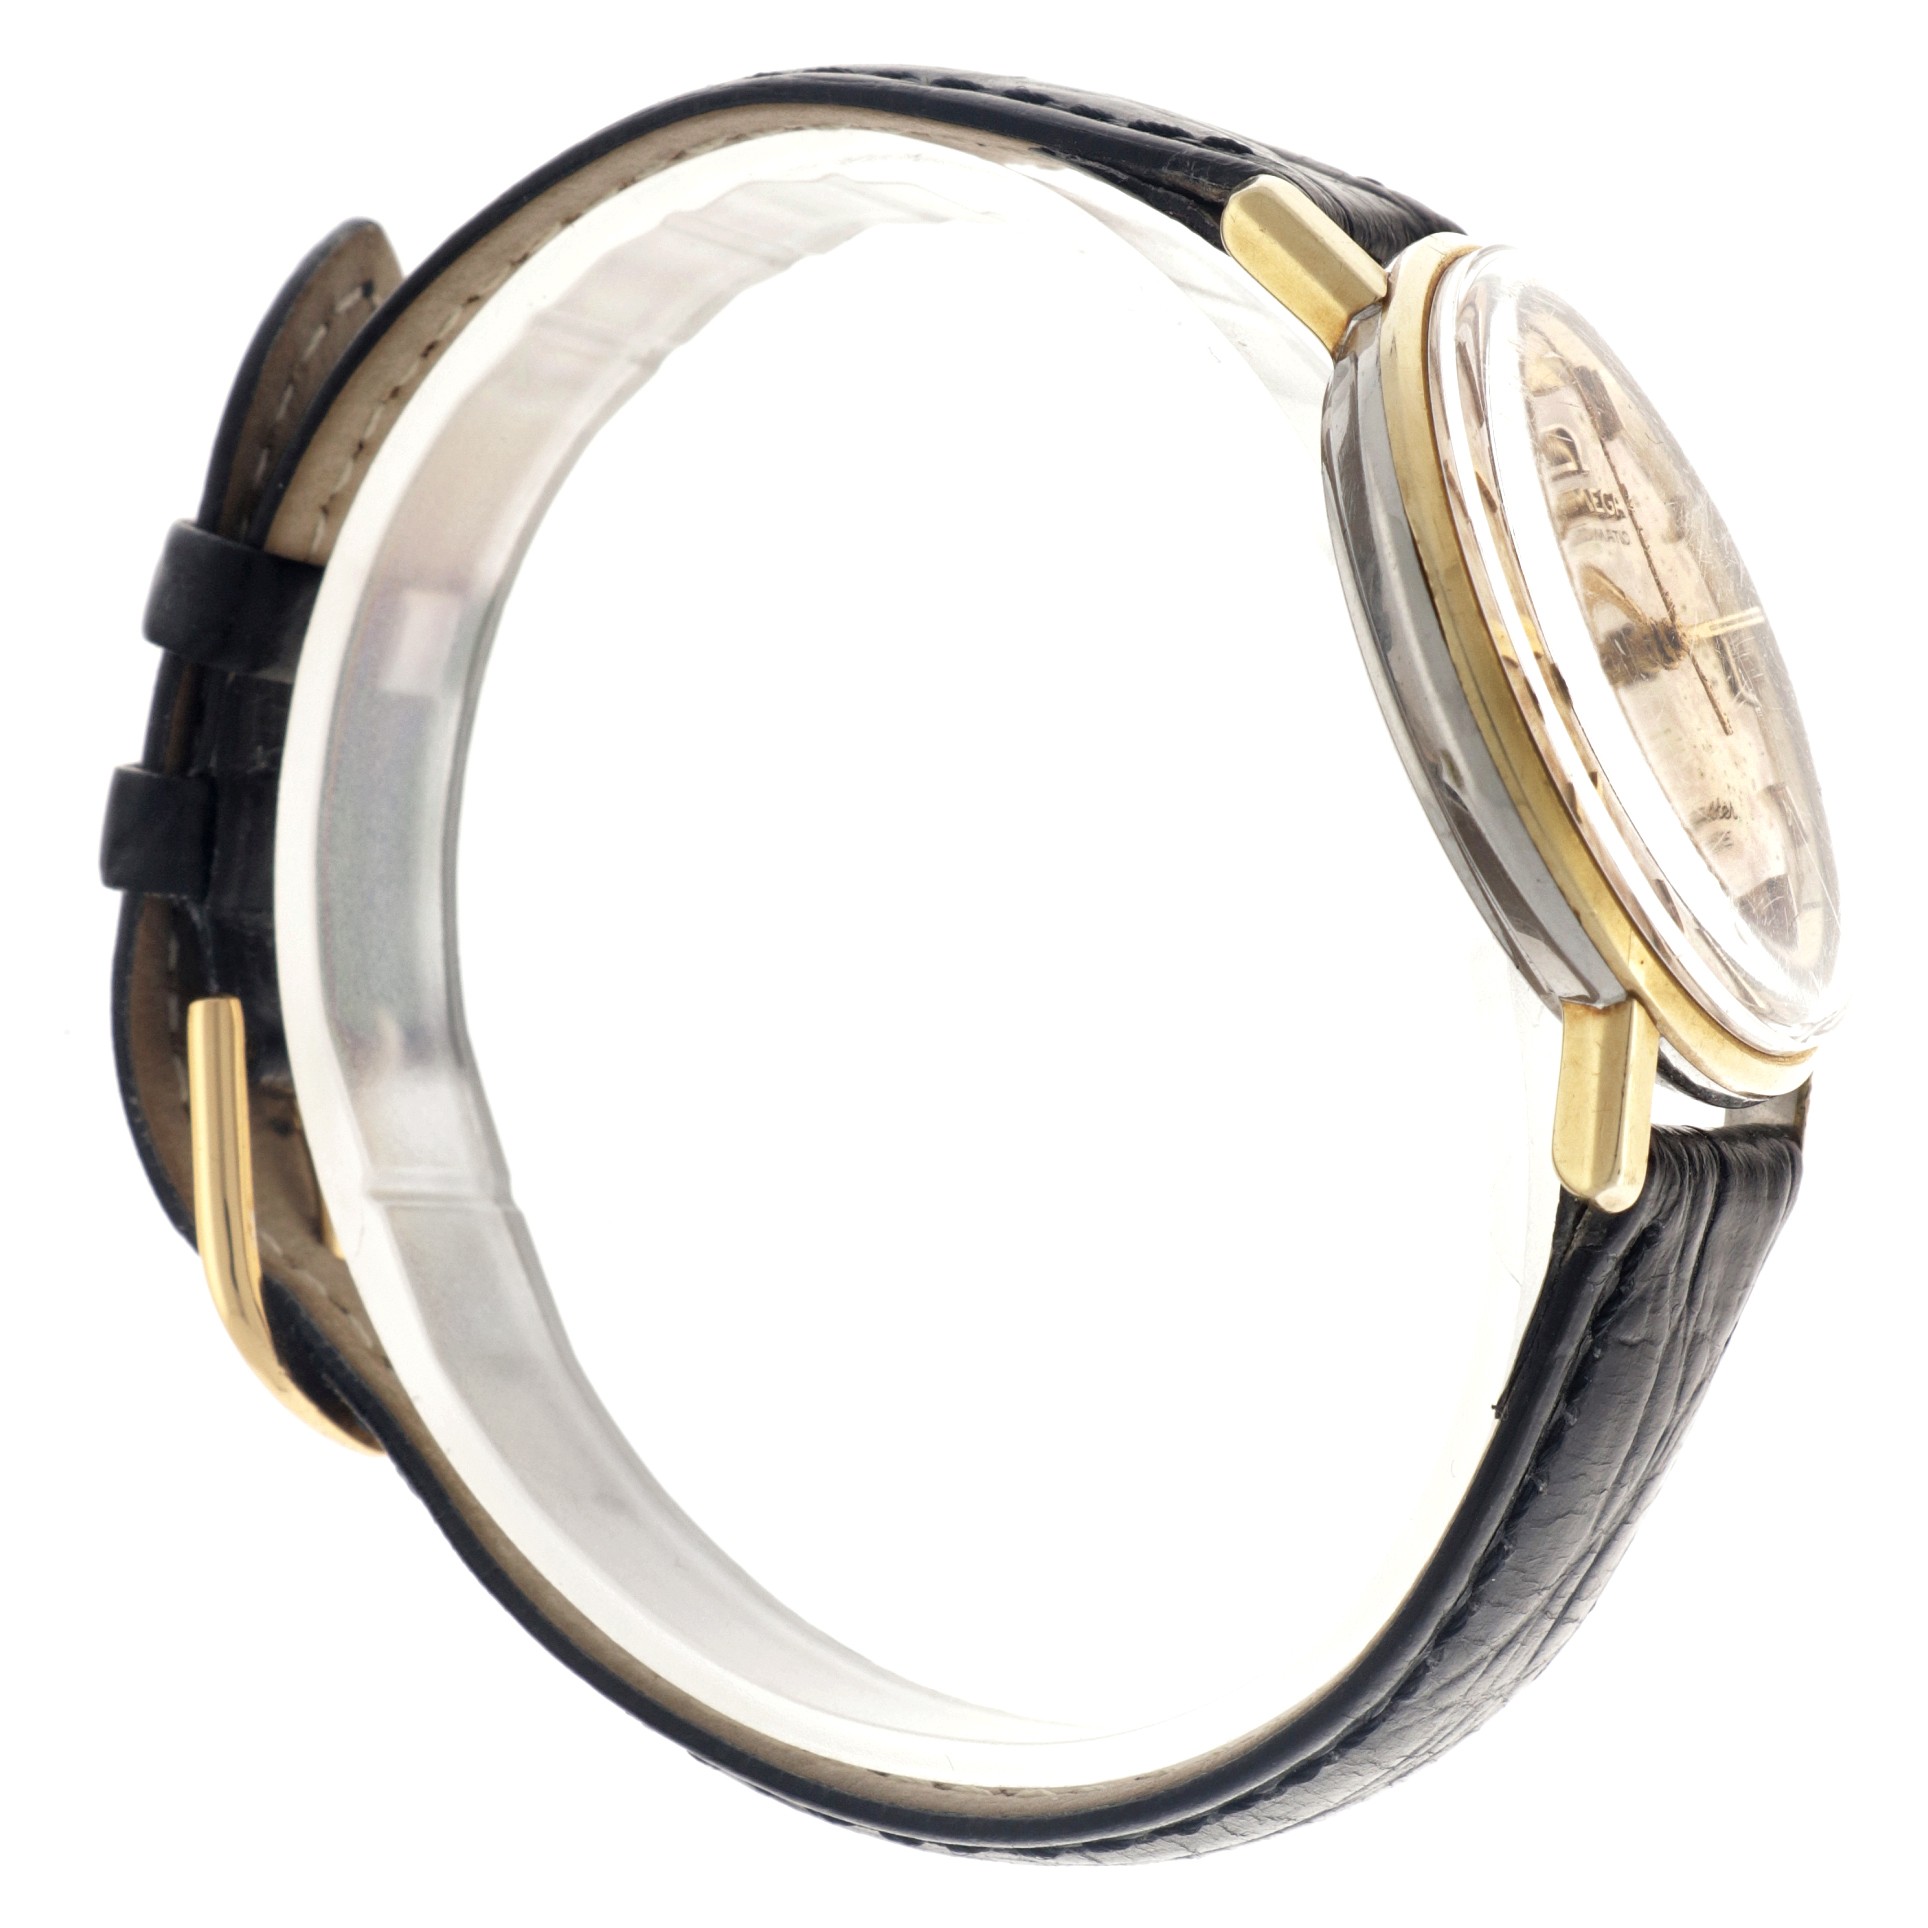 No Reserve - Omega Seamaster De Ville goldcap  - Men's watch. - Image 4 of 5